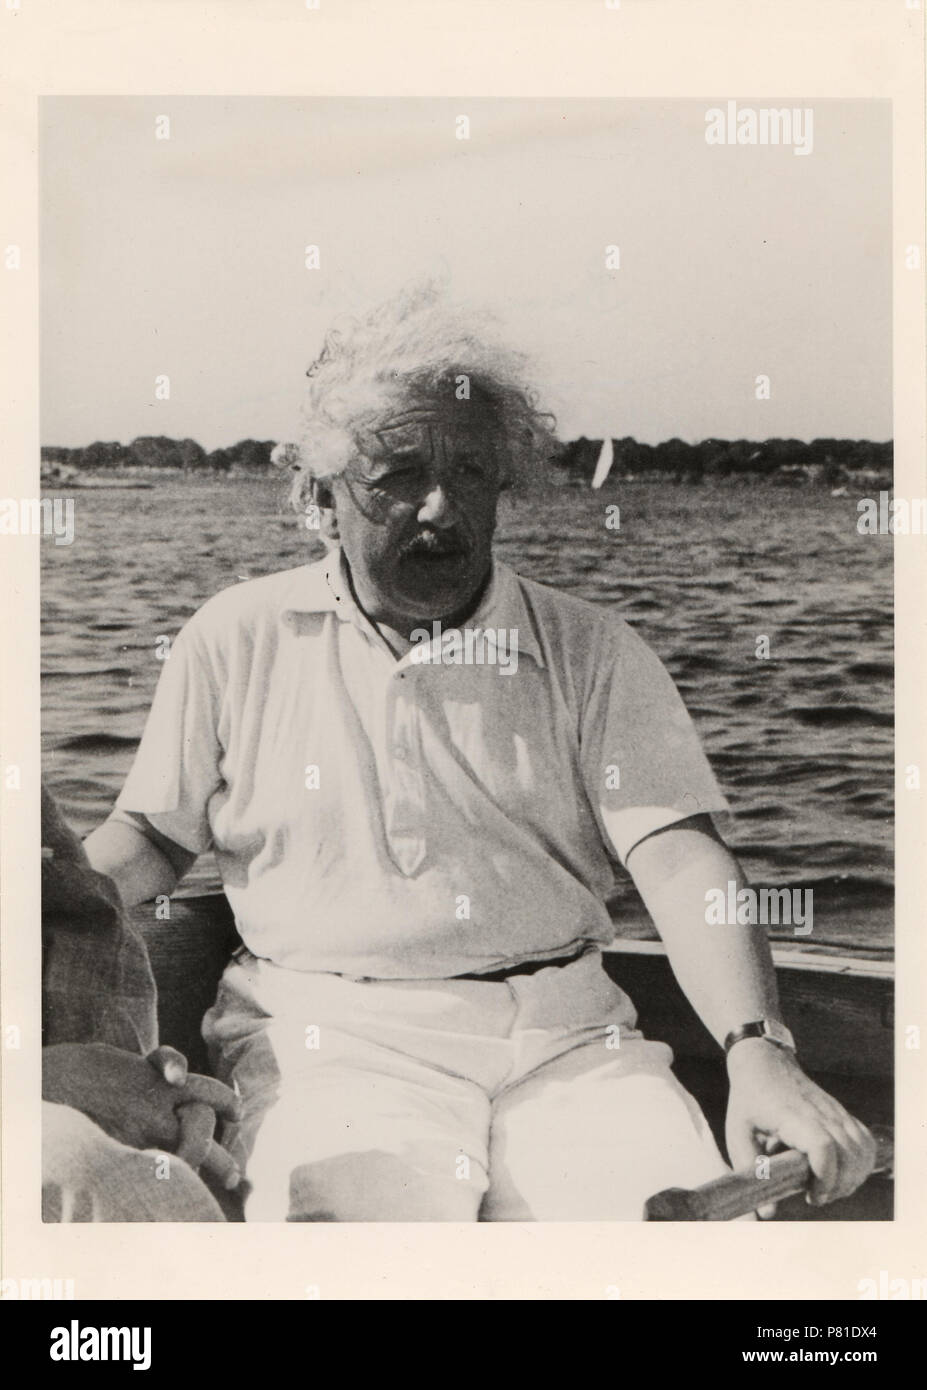 Watch Hill Rhode Island, Stati Uniti d'America 148 ETH-BIB-Einstein, Albert (1879-1955) als Segler an der Pinne-Portrait-Portr 03124 Foto Stock